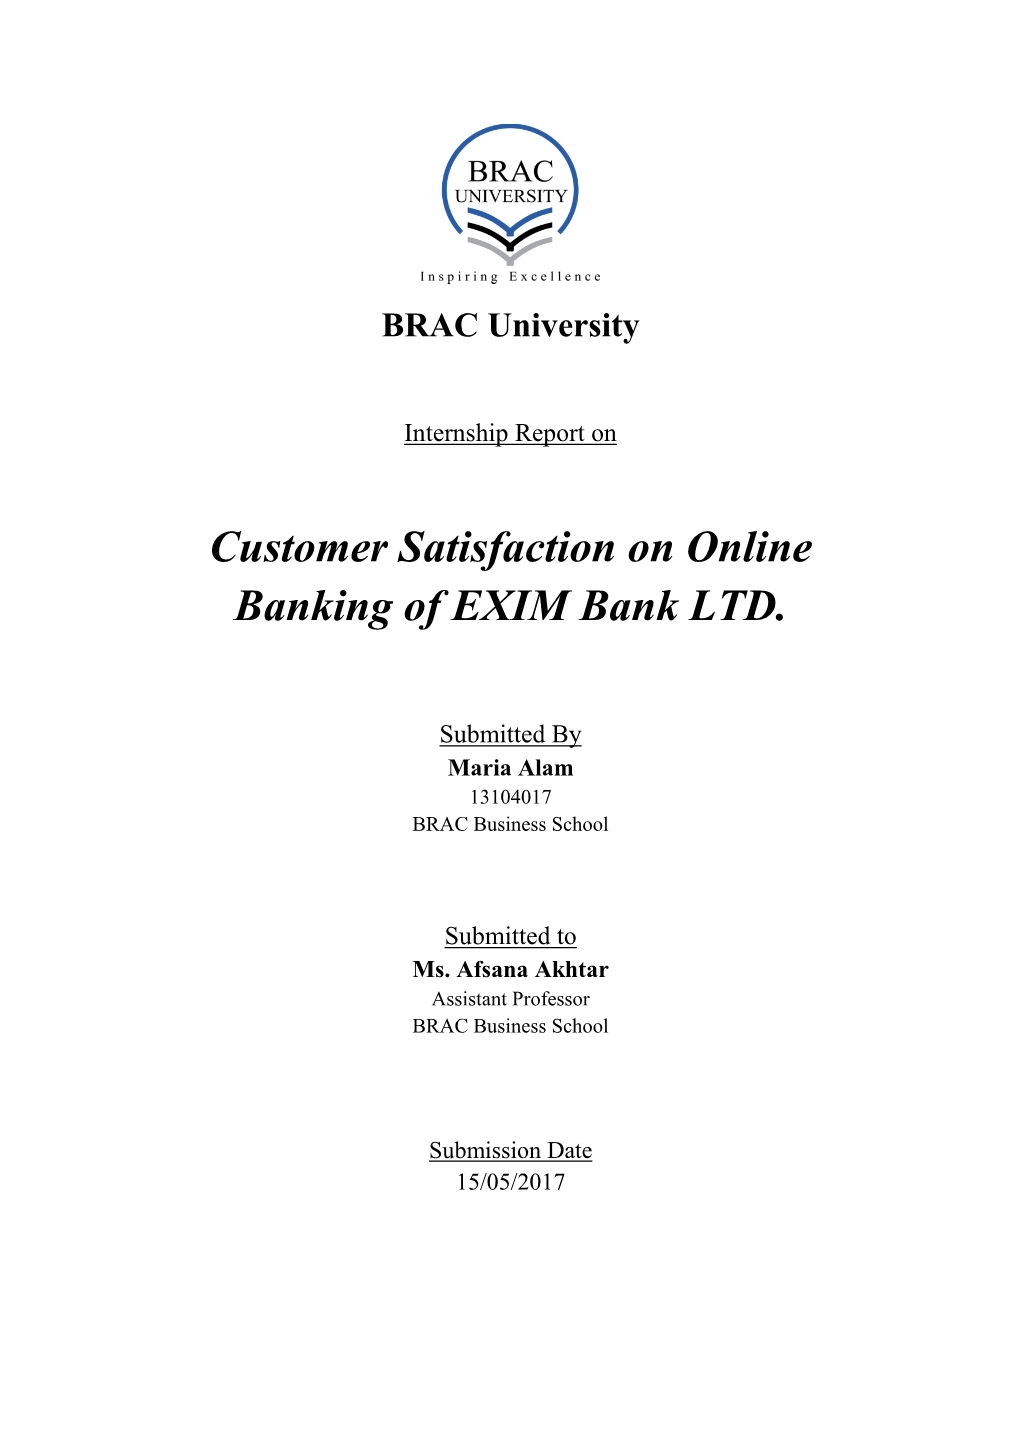 Customer Satisfaction on Online Banking of EXIM Bank LTD